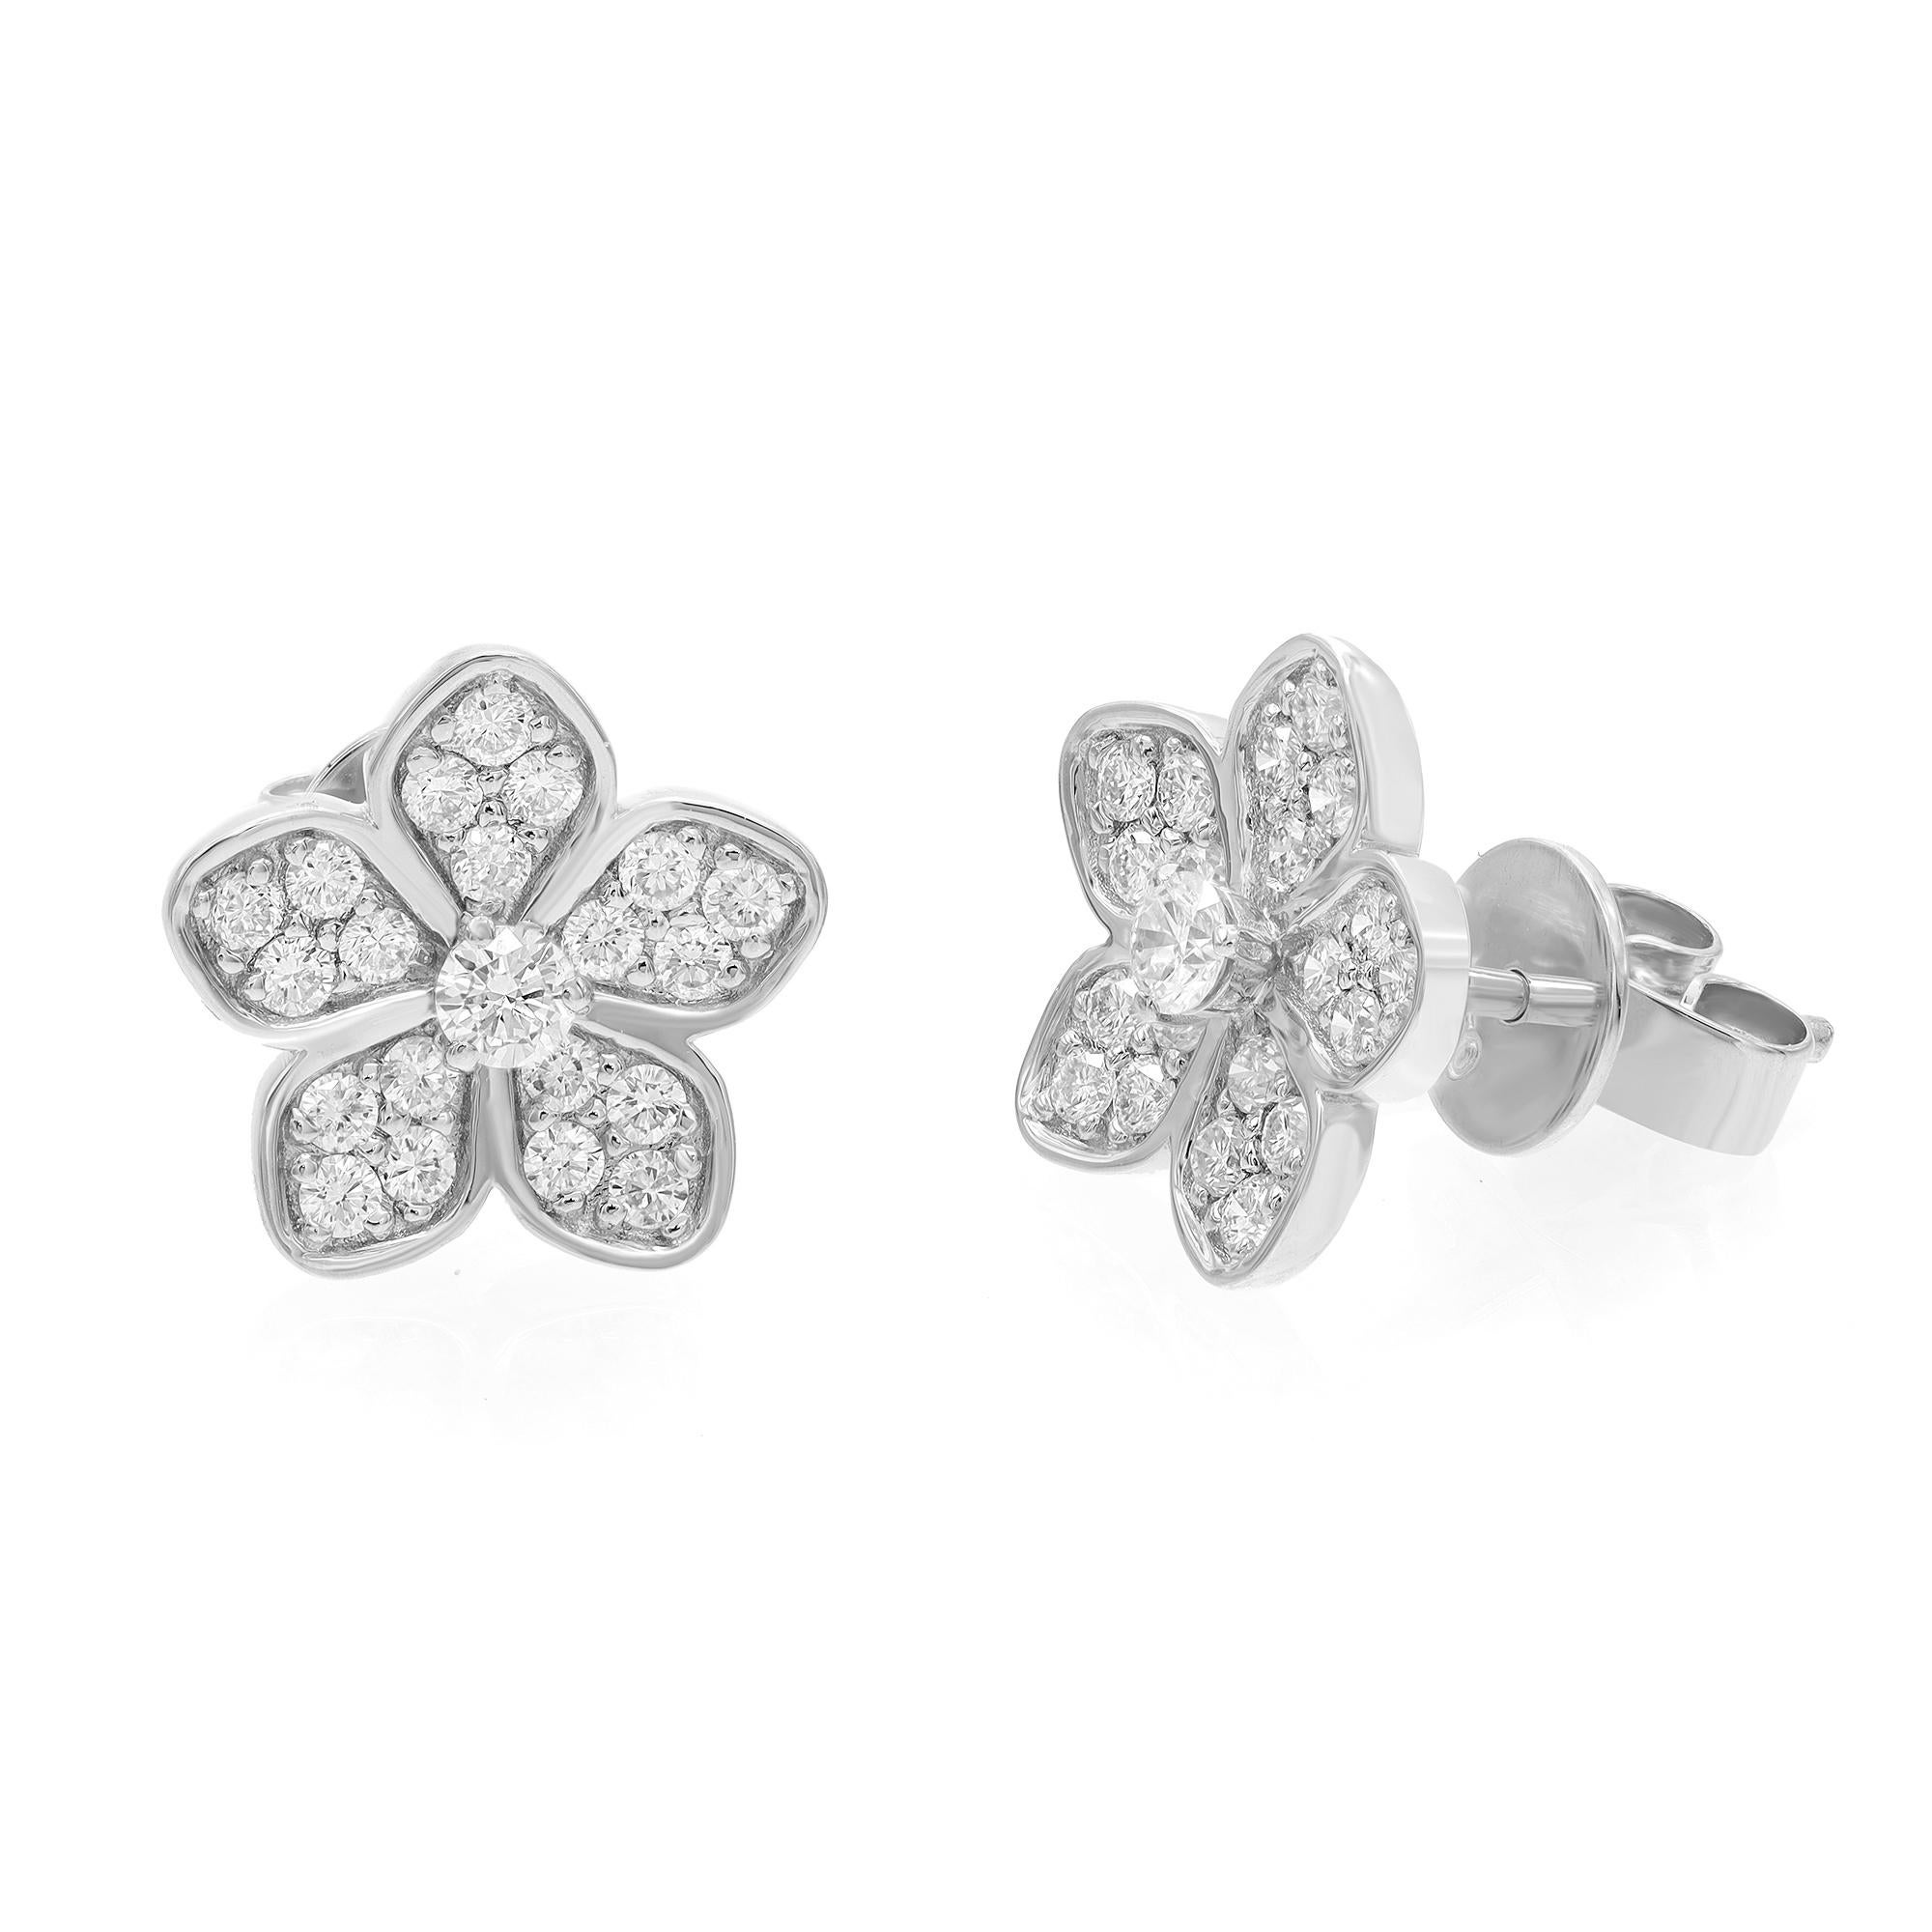 Pave Set Round Cut Diamond Flower Stud Earrings 18K White Gold 0.52Cttw